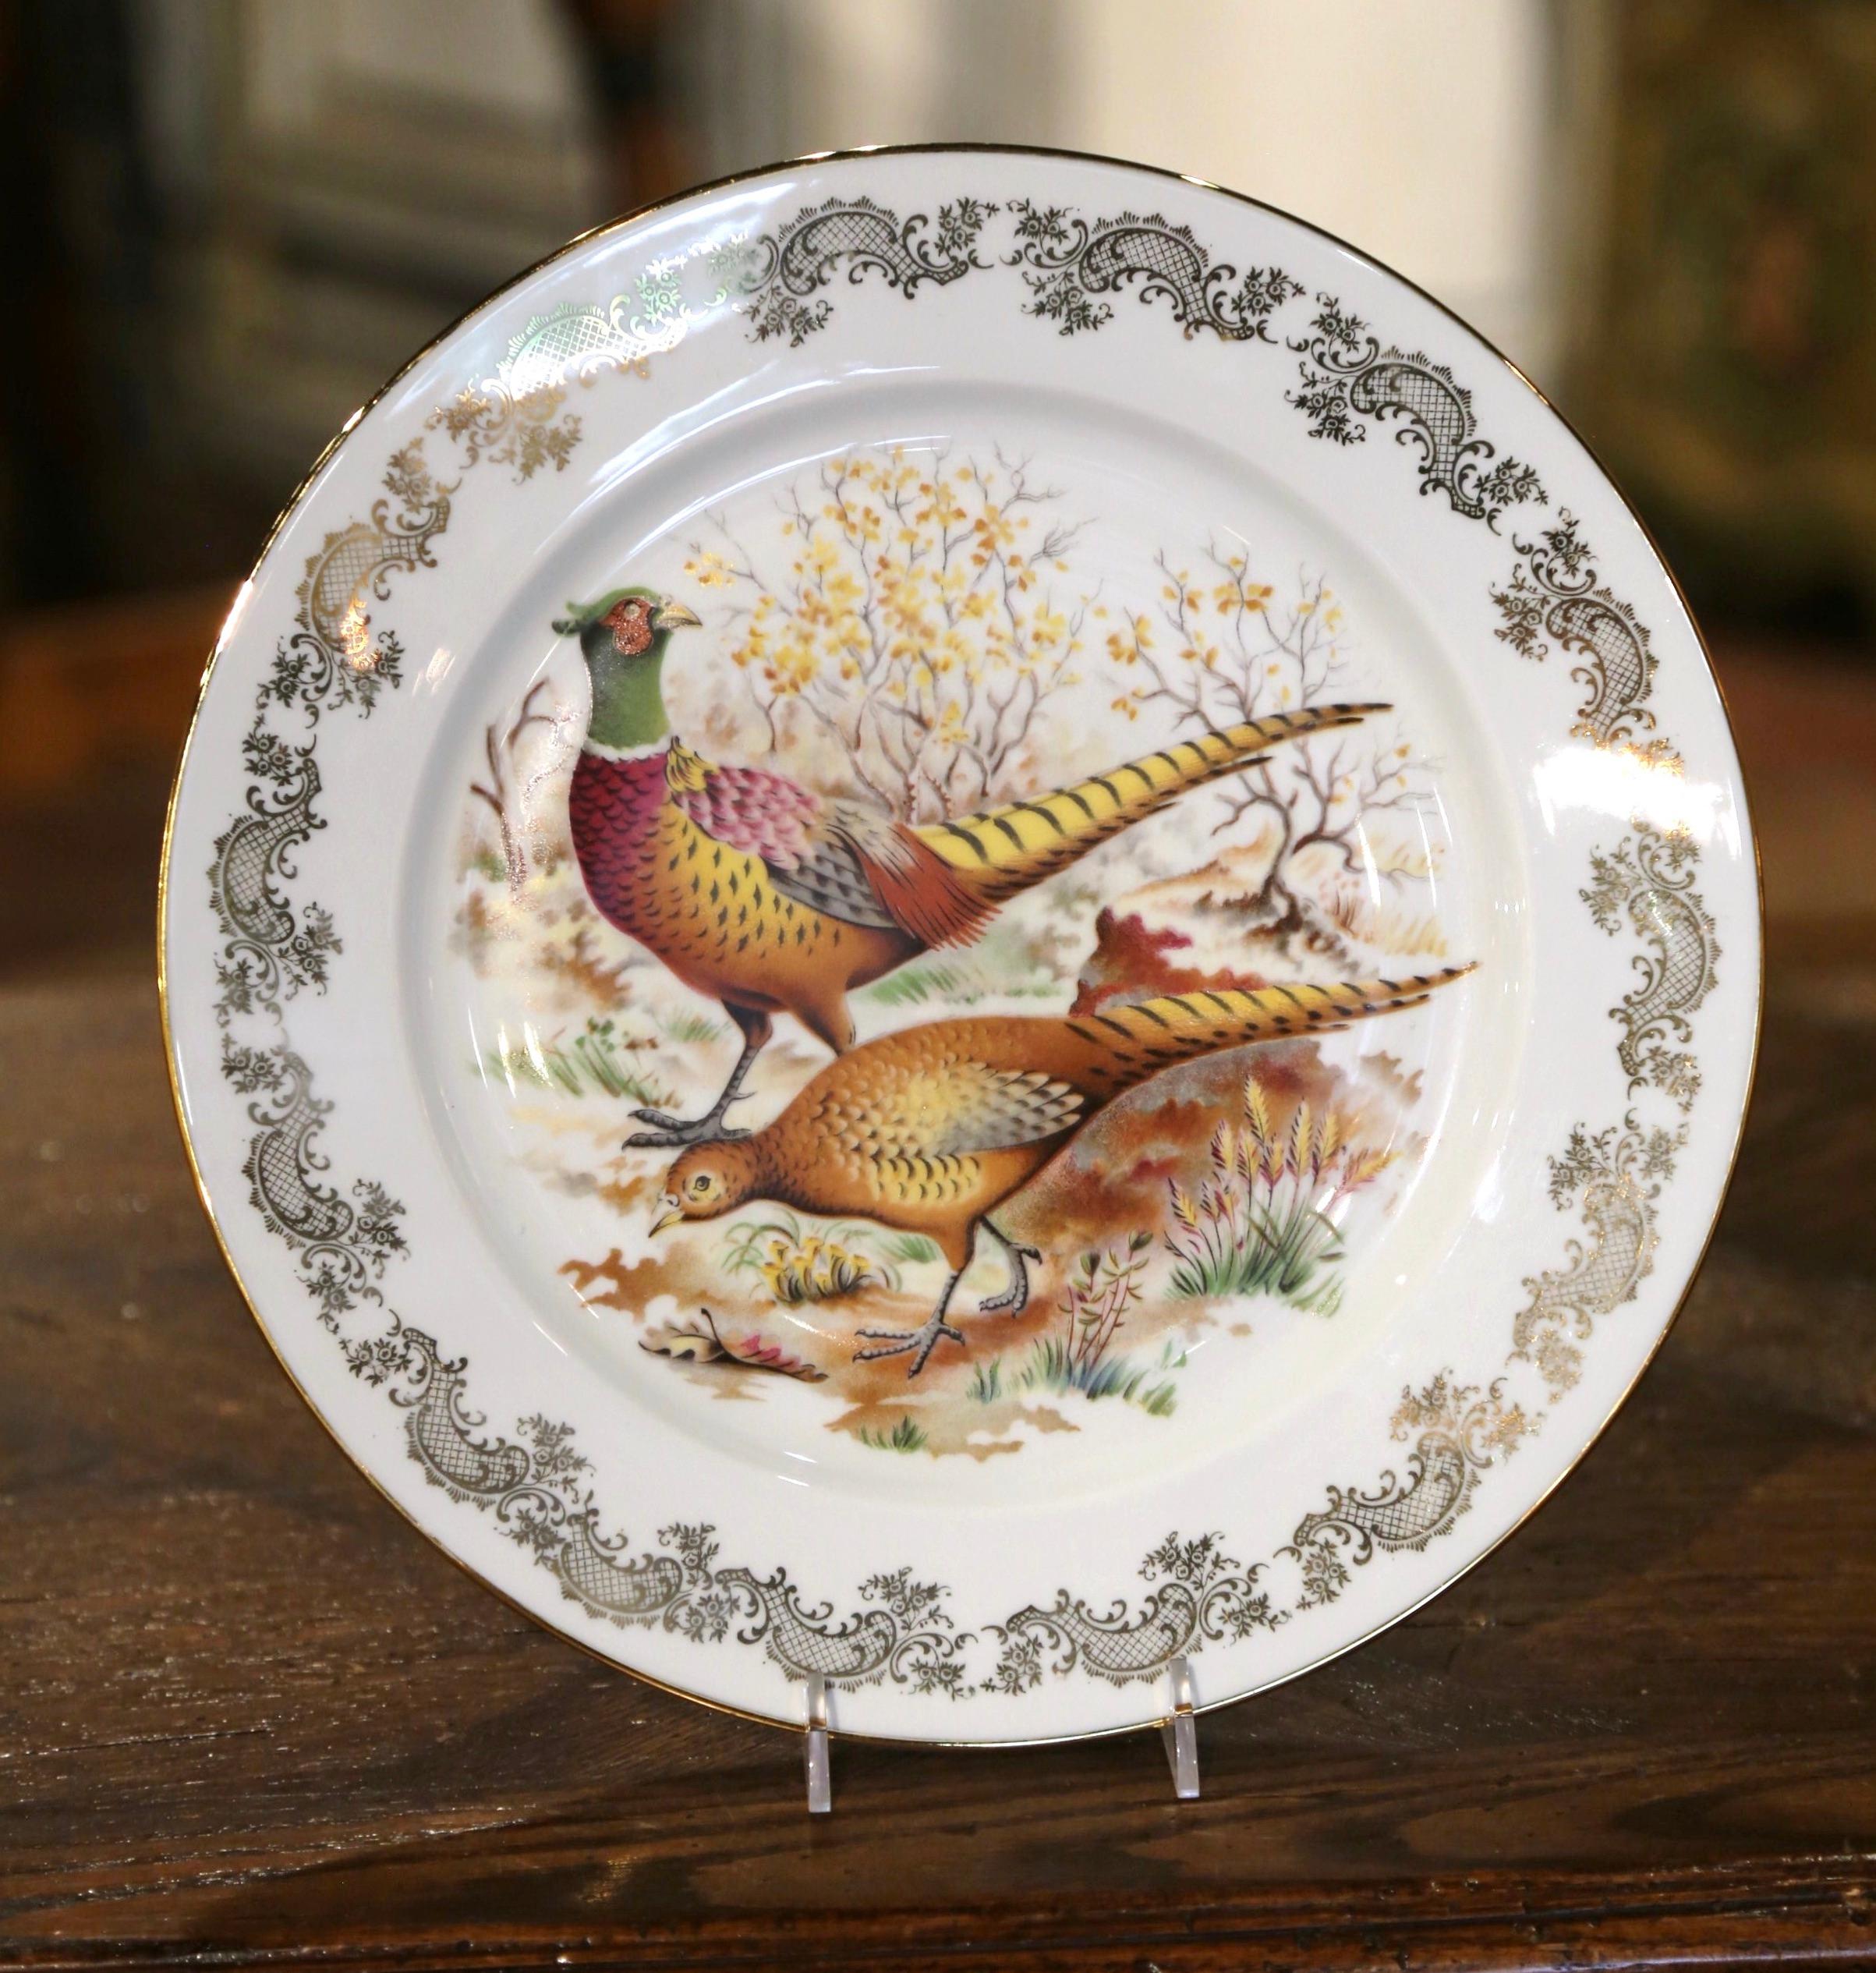  French Limoges Porcelain Service with Bird Motifs Signed Benoit - Set of 13 1